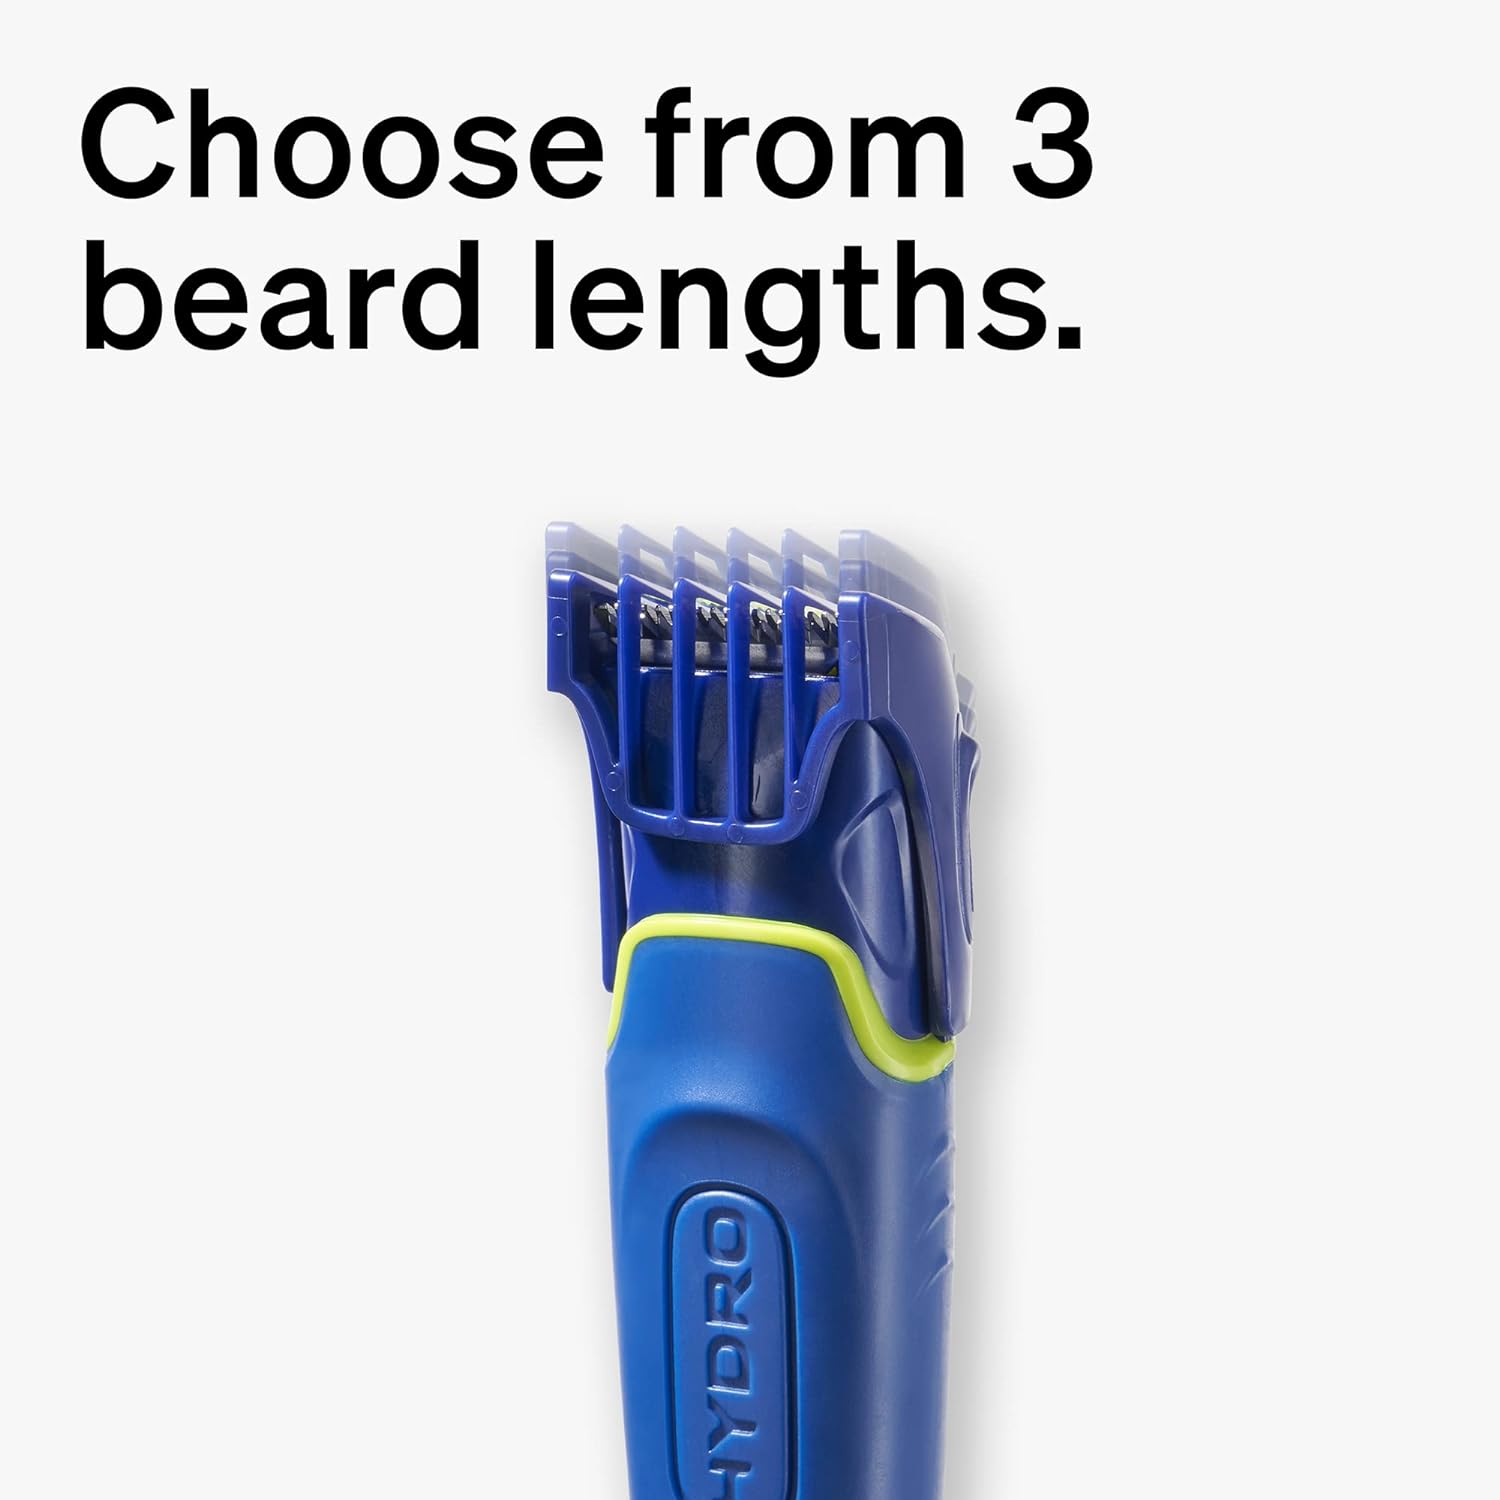 Schick Hydro Groomer — Beard Trimmer for Men, Beard Groomer with 5 Razor Blades, Blue : Beauty & Personal Care